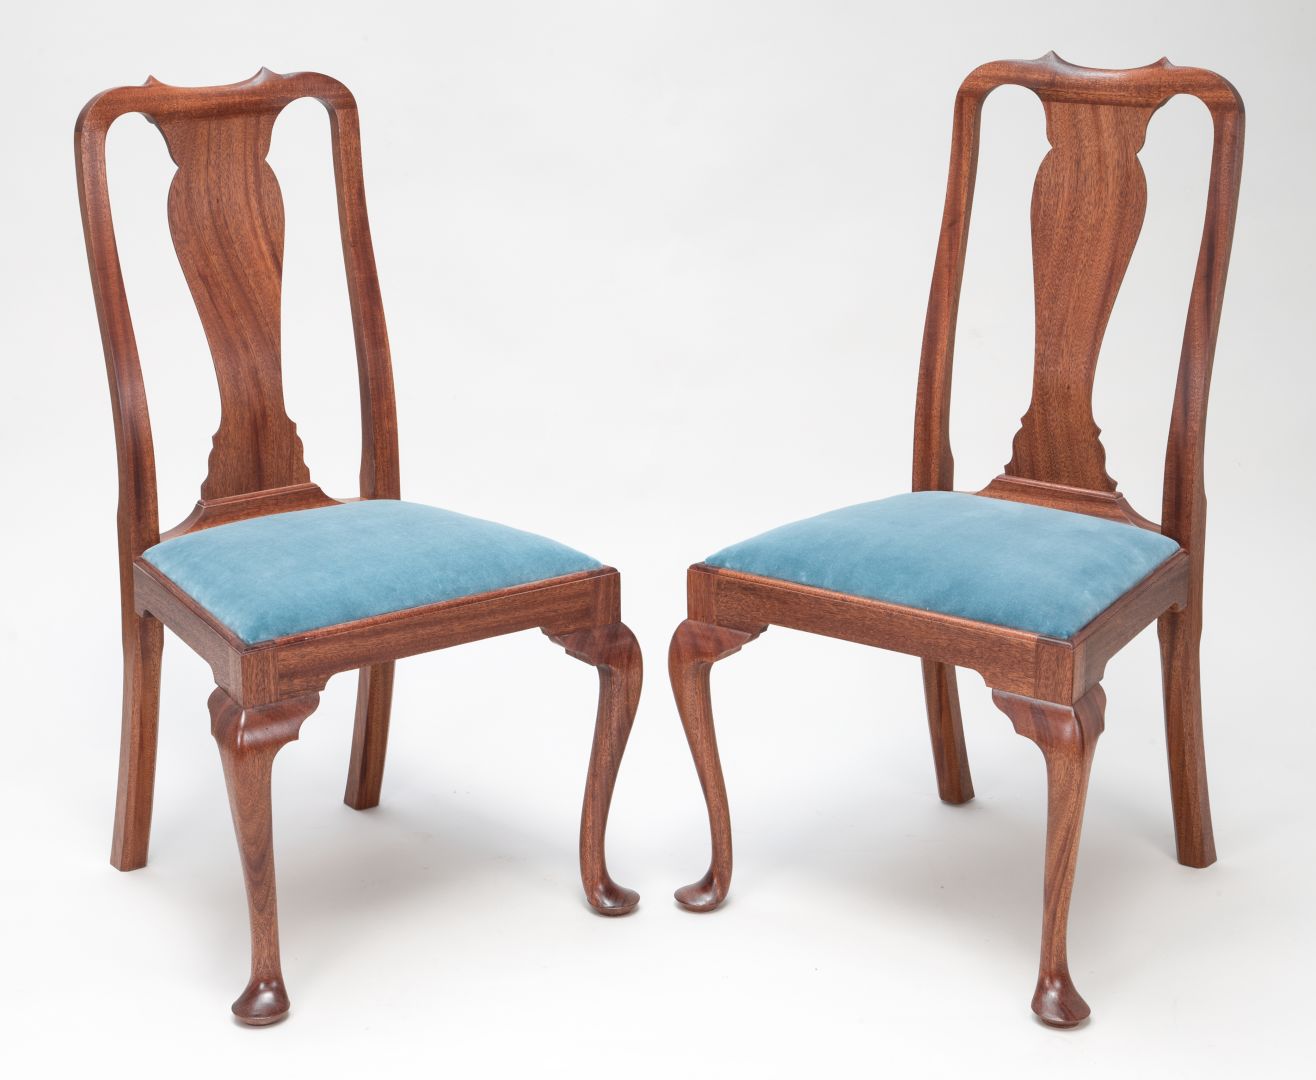 Side chairs by Mike Turner CF ’20 and Jonathan Ota CF ’19